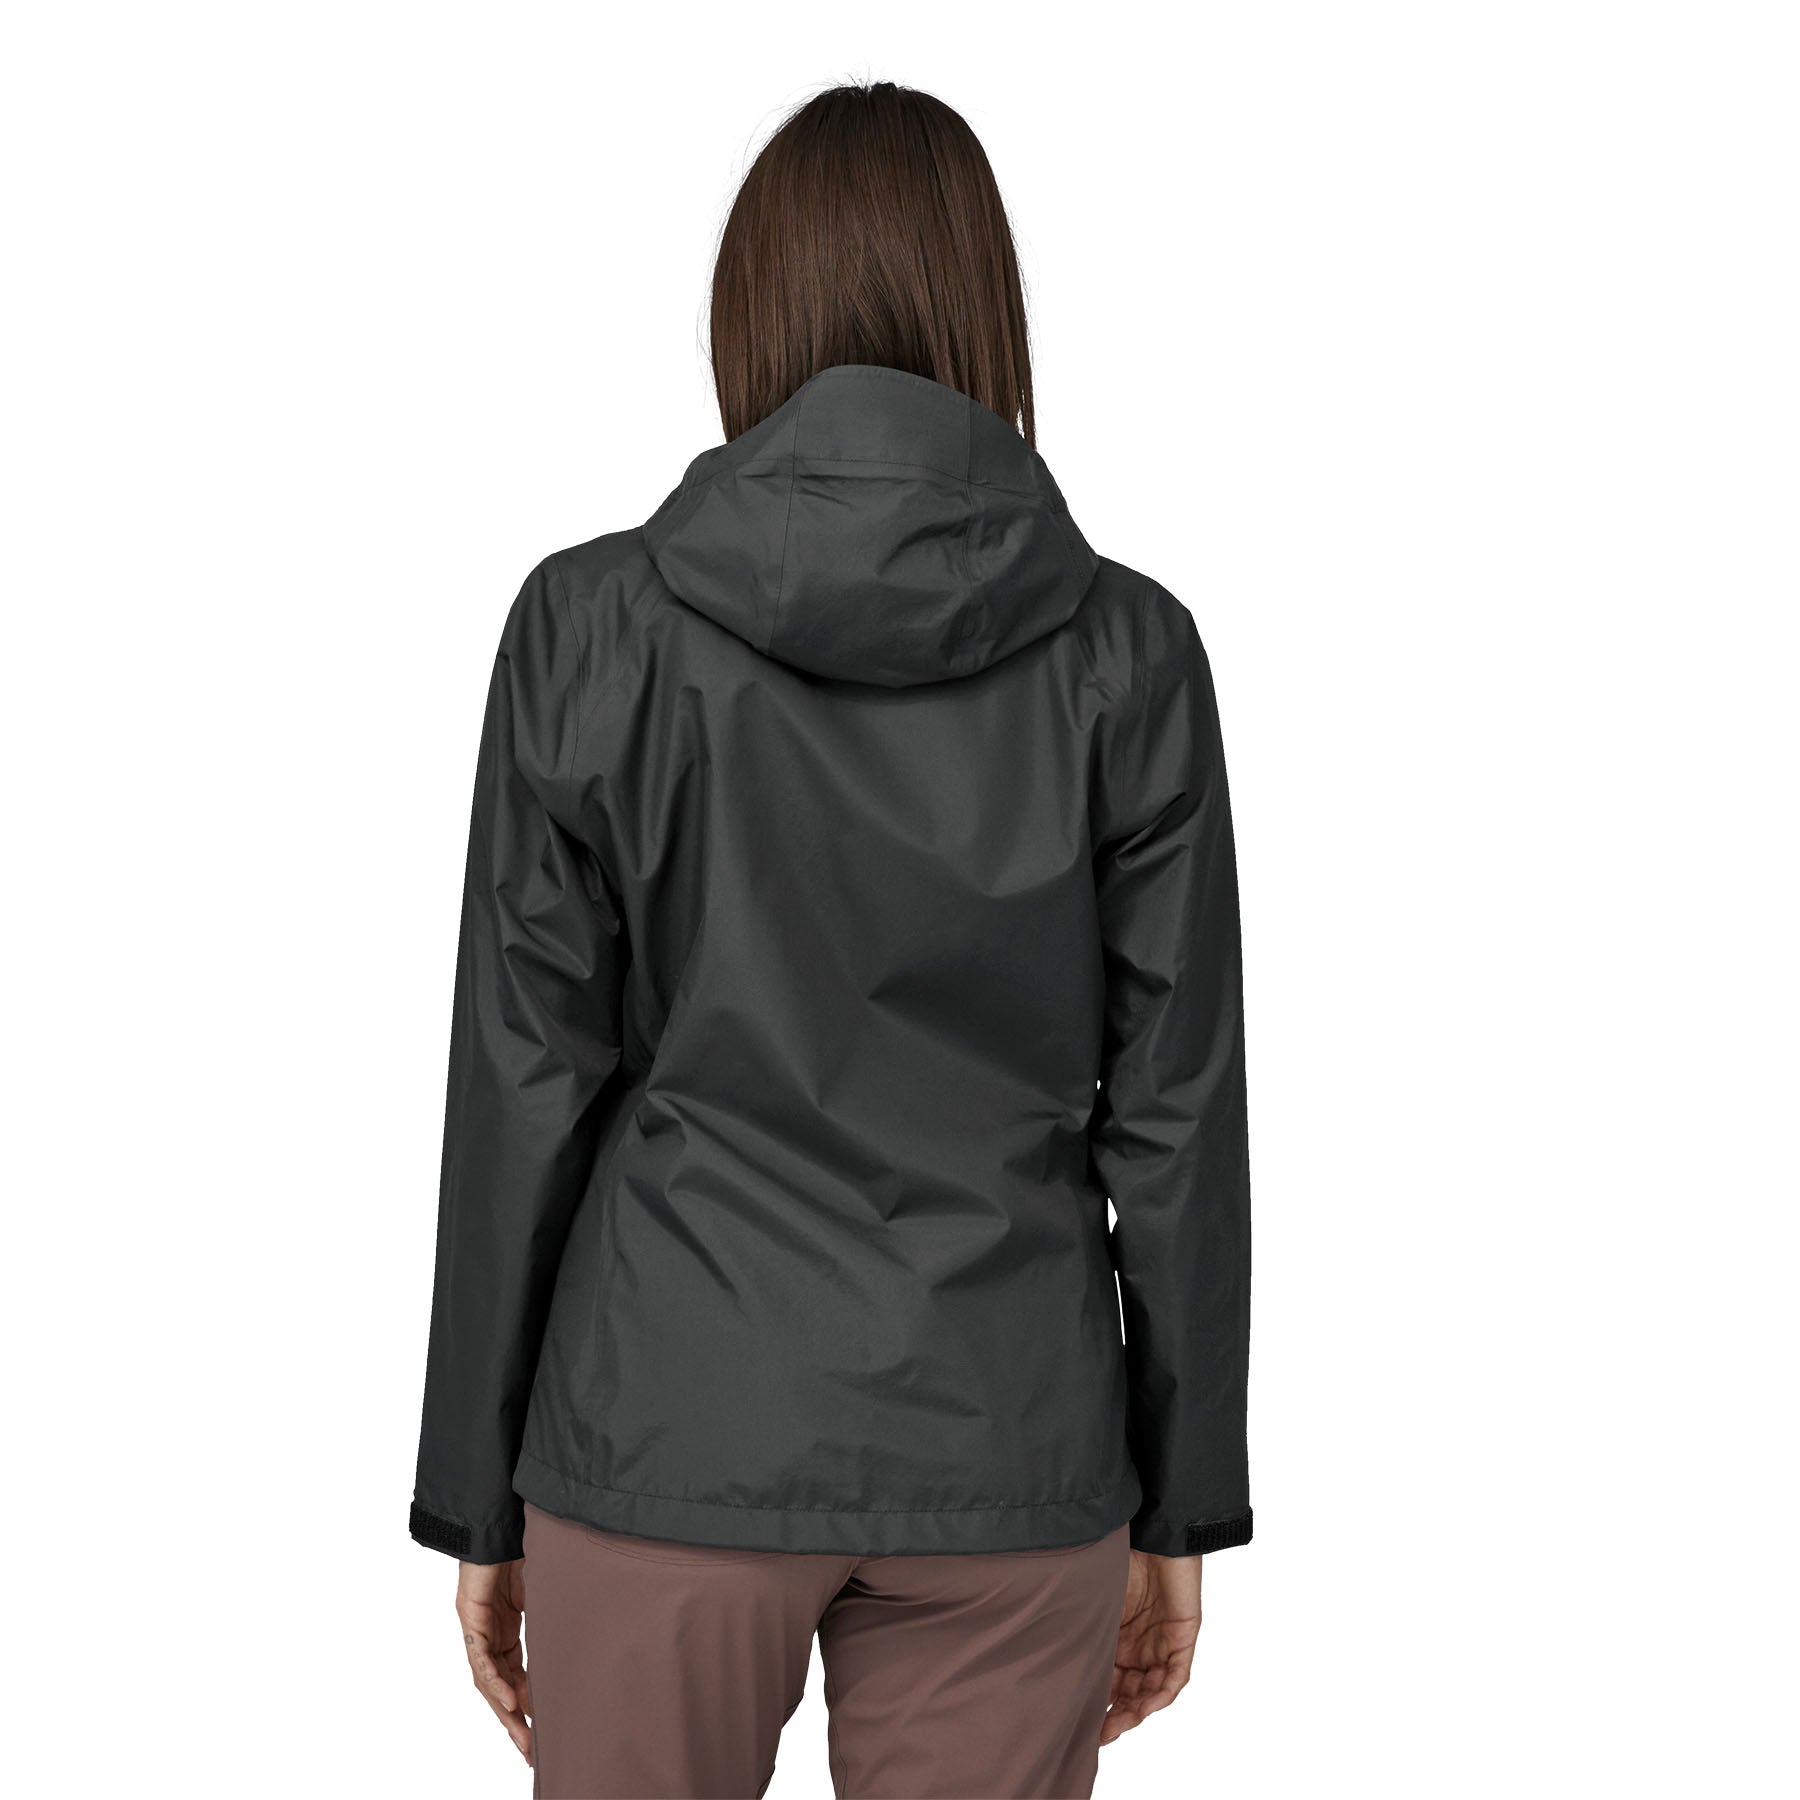 Patagonia Women's Torrentshell 3L Rain Jacket - Black